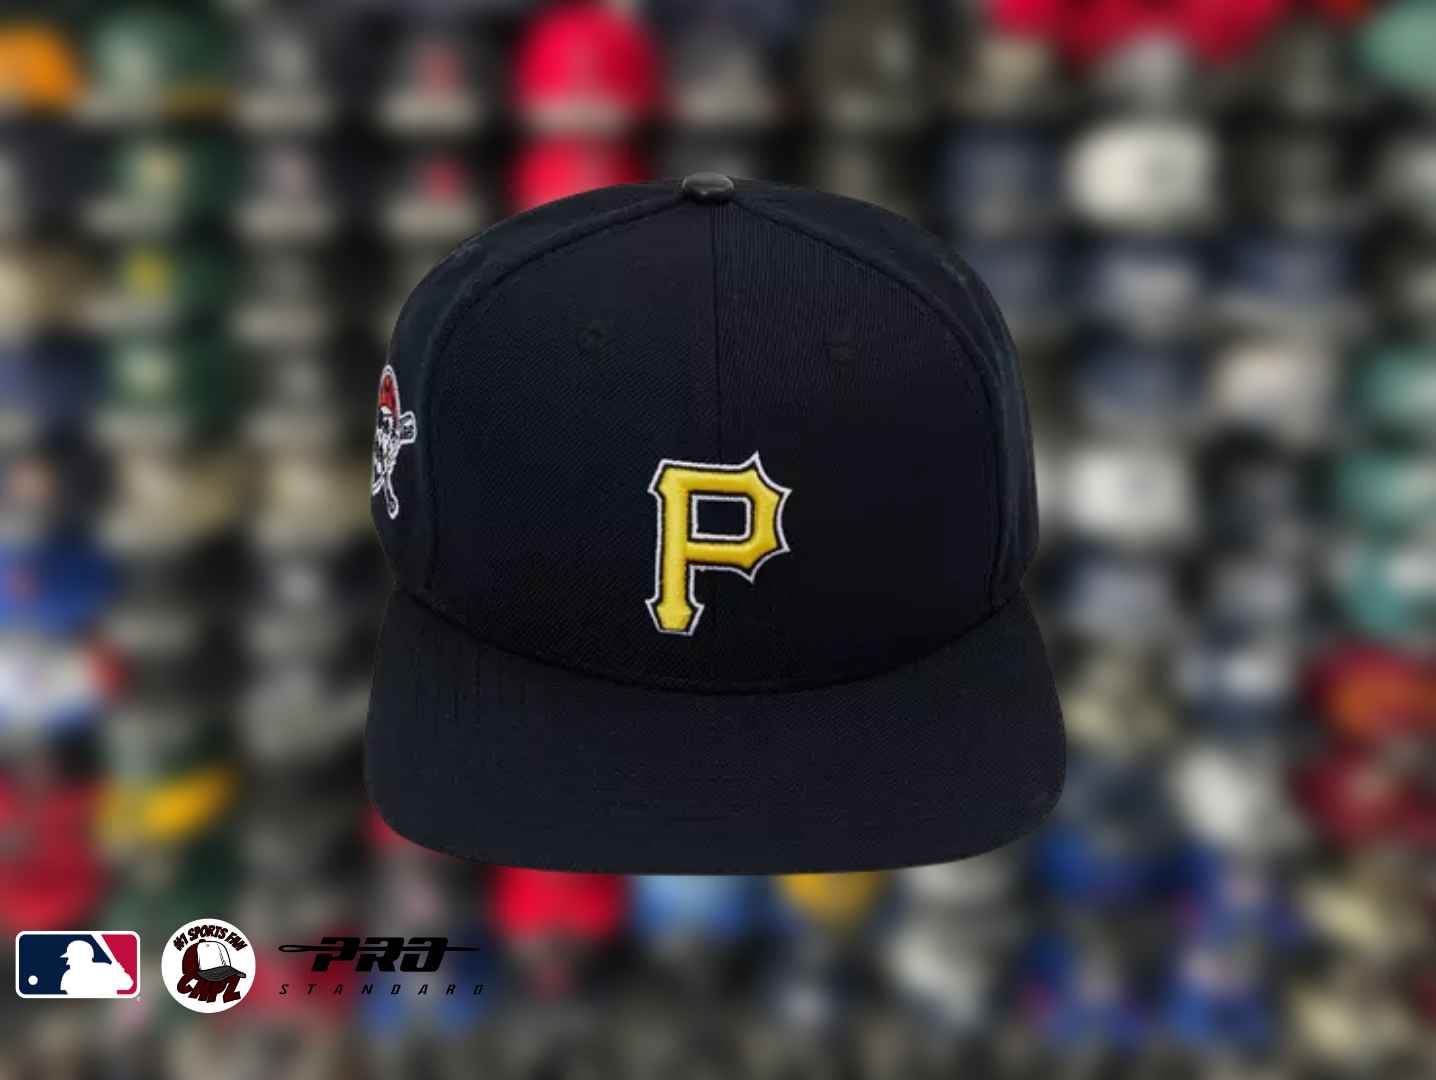 Men's Pittsburgh Pirates Pro Standard White/Black Logo Snapback Hat